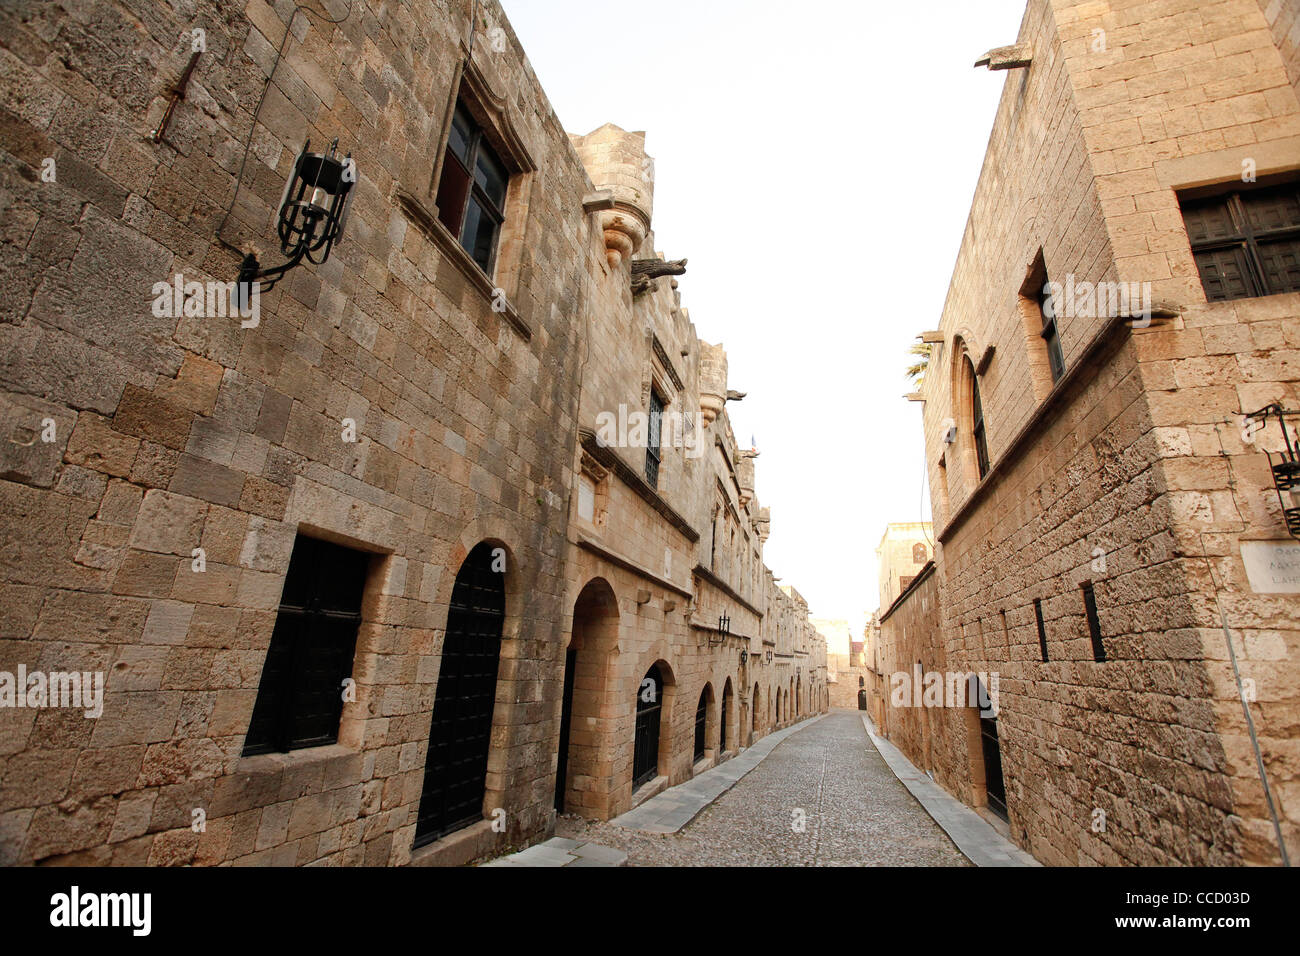 Medieval street, Rodos, Rhodes island, Dodekanes, Greece, Europe Stock Photo